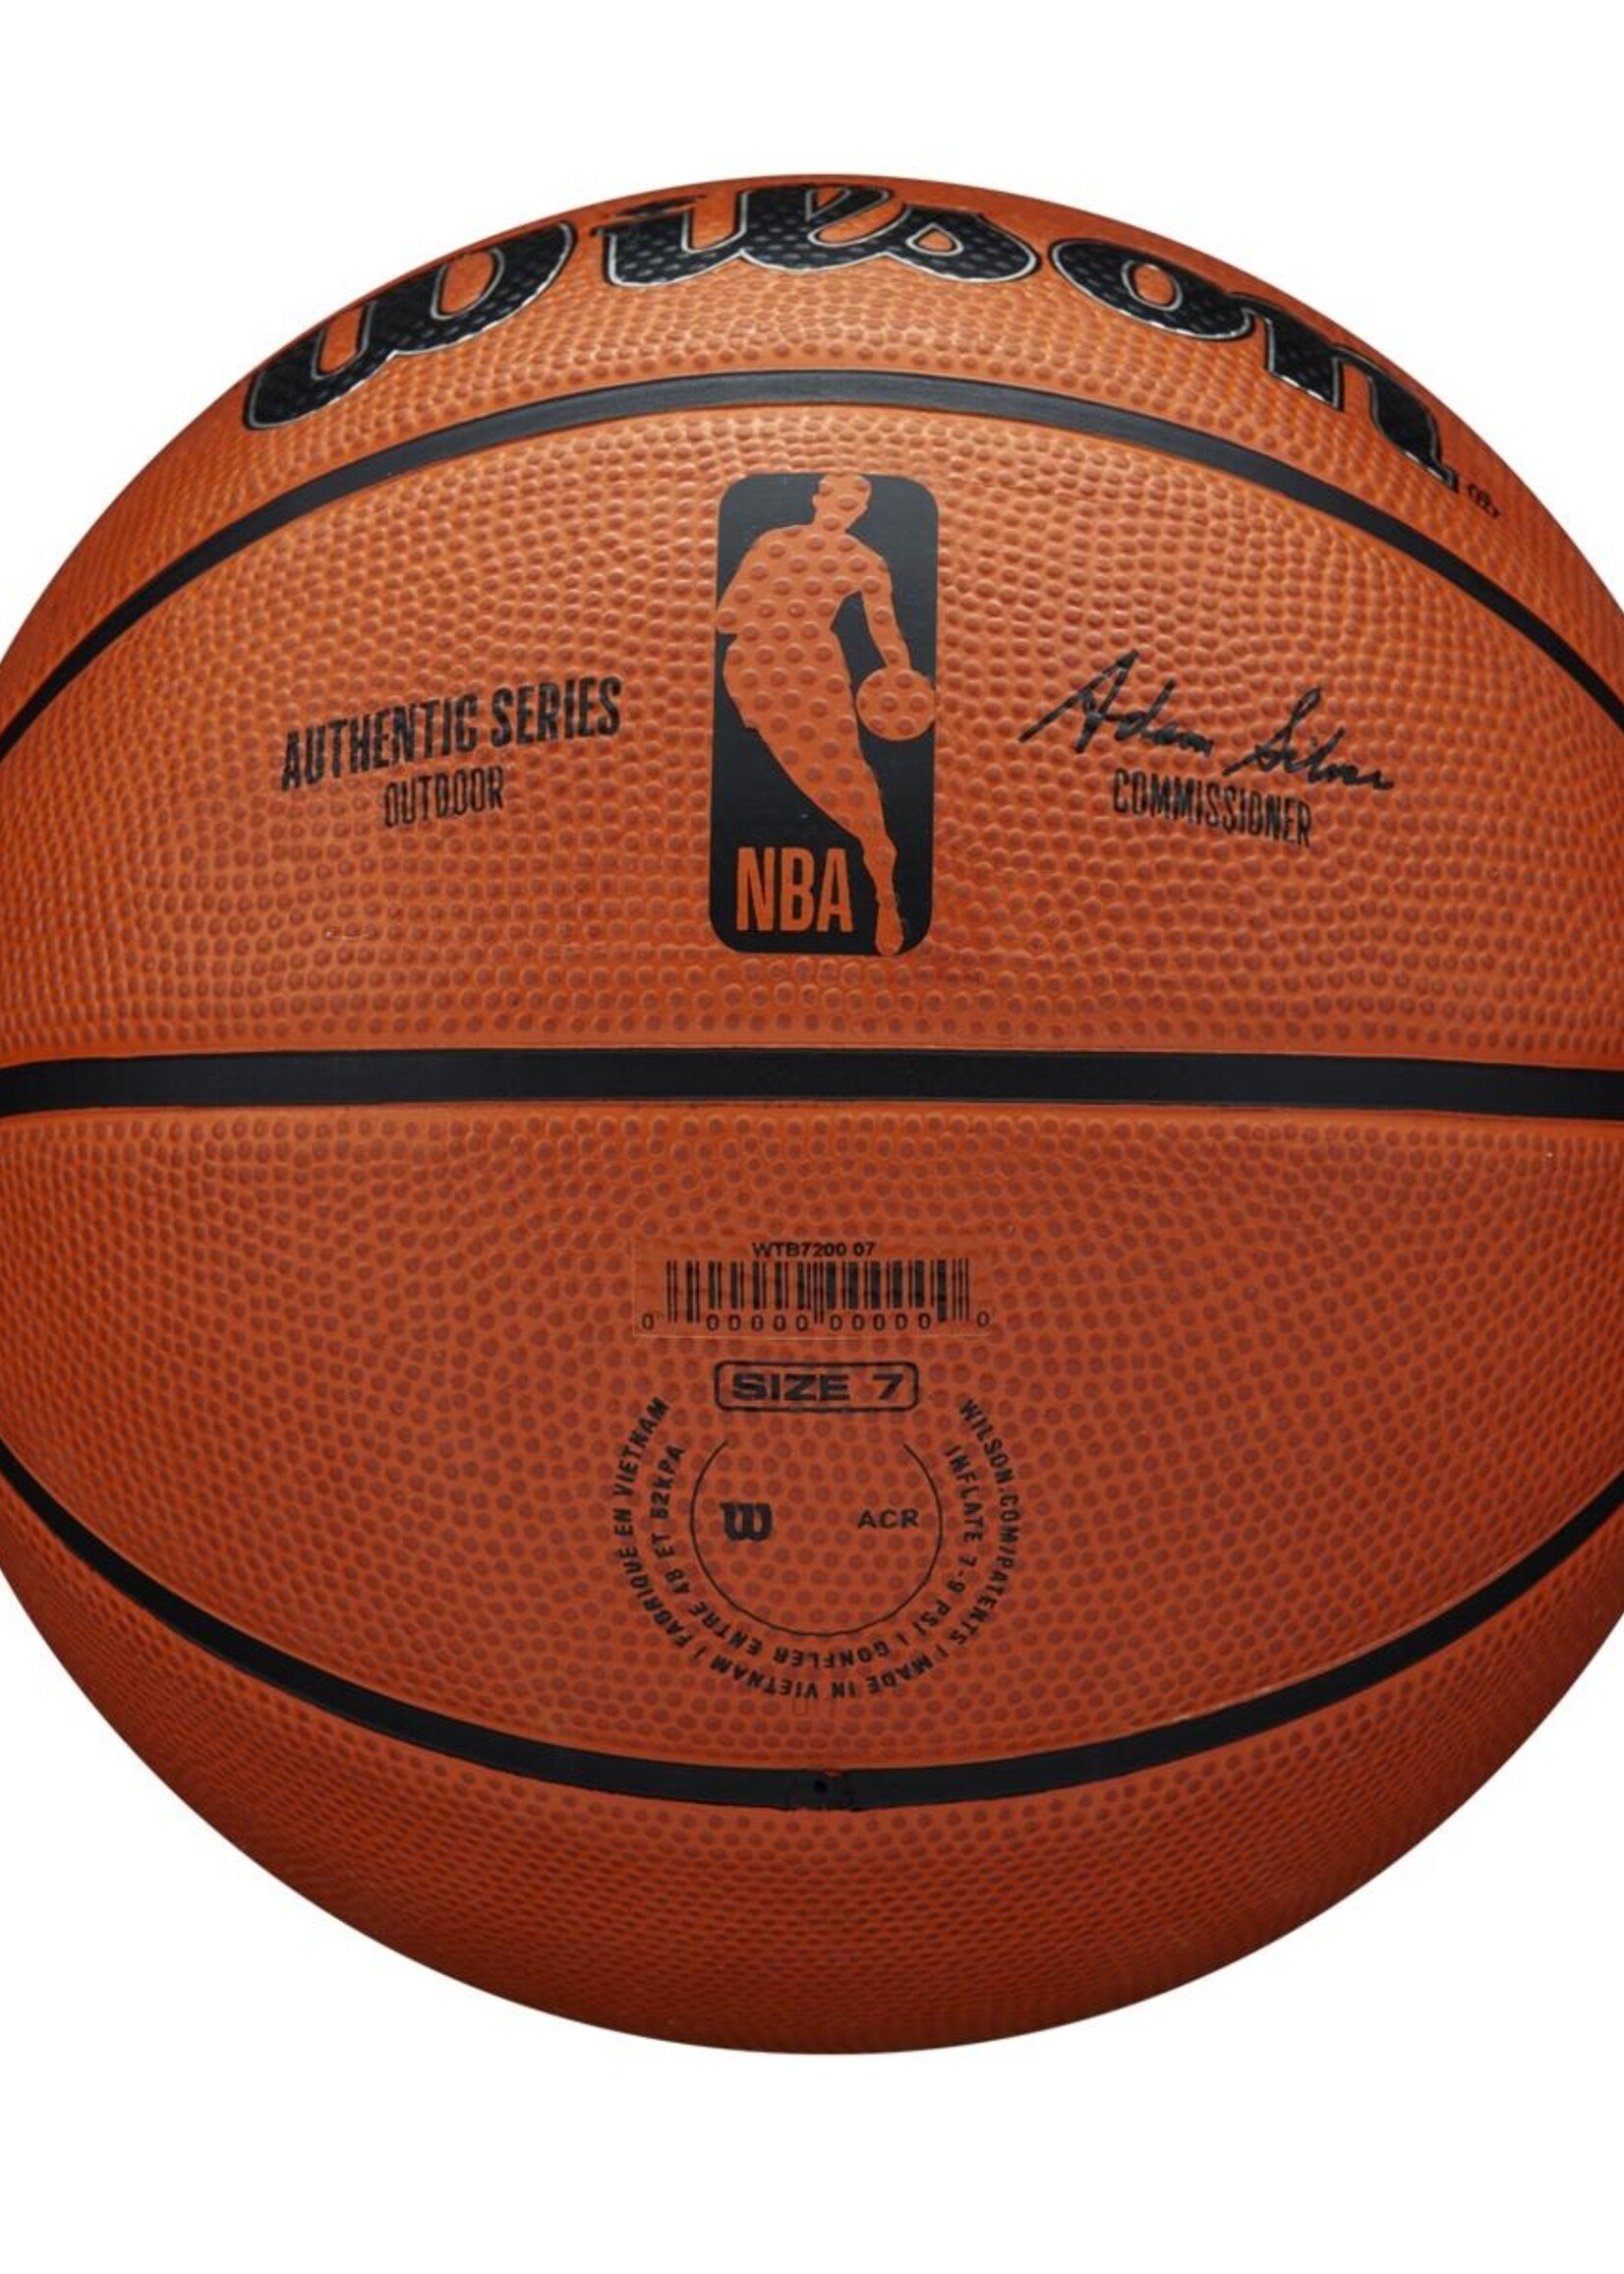 Wilson NBA Authentic Series Outdoor Basketbal (7)